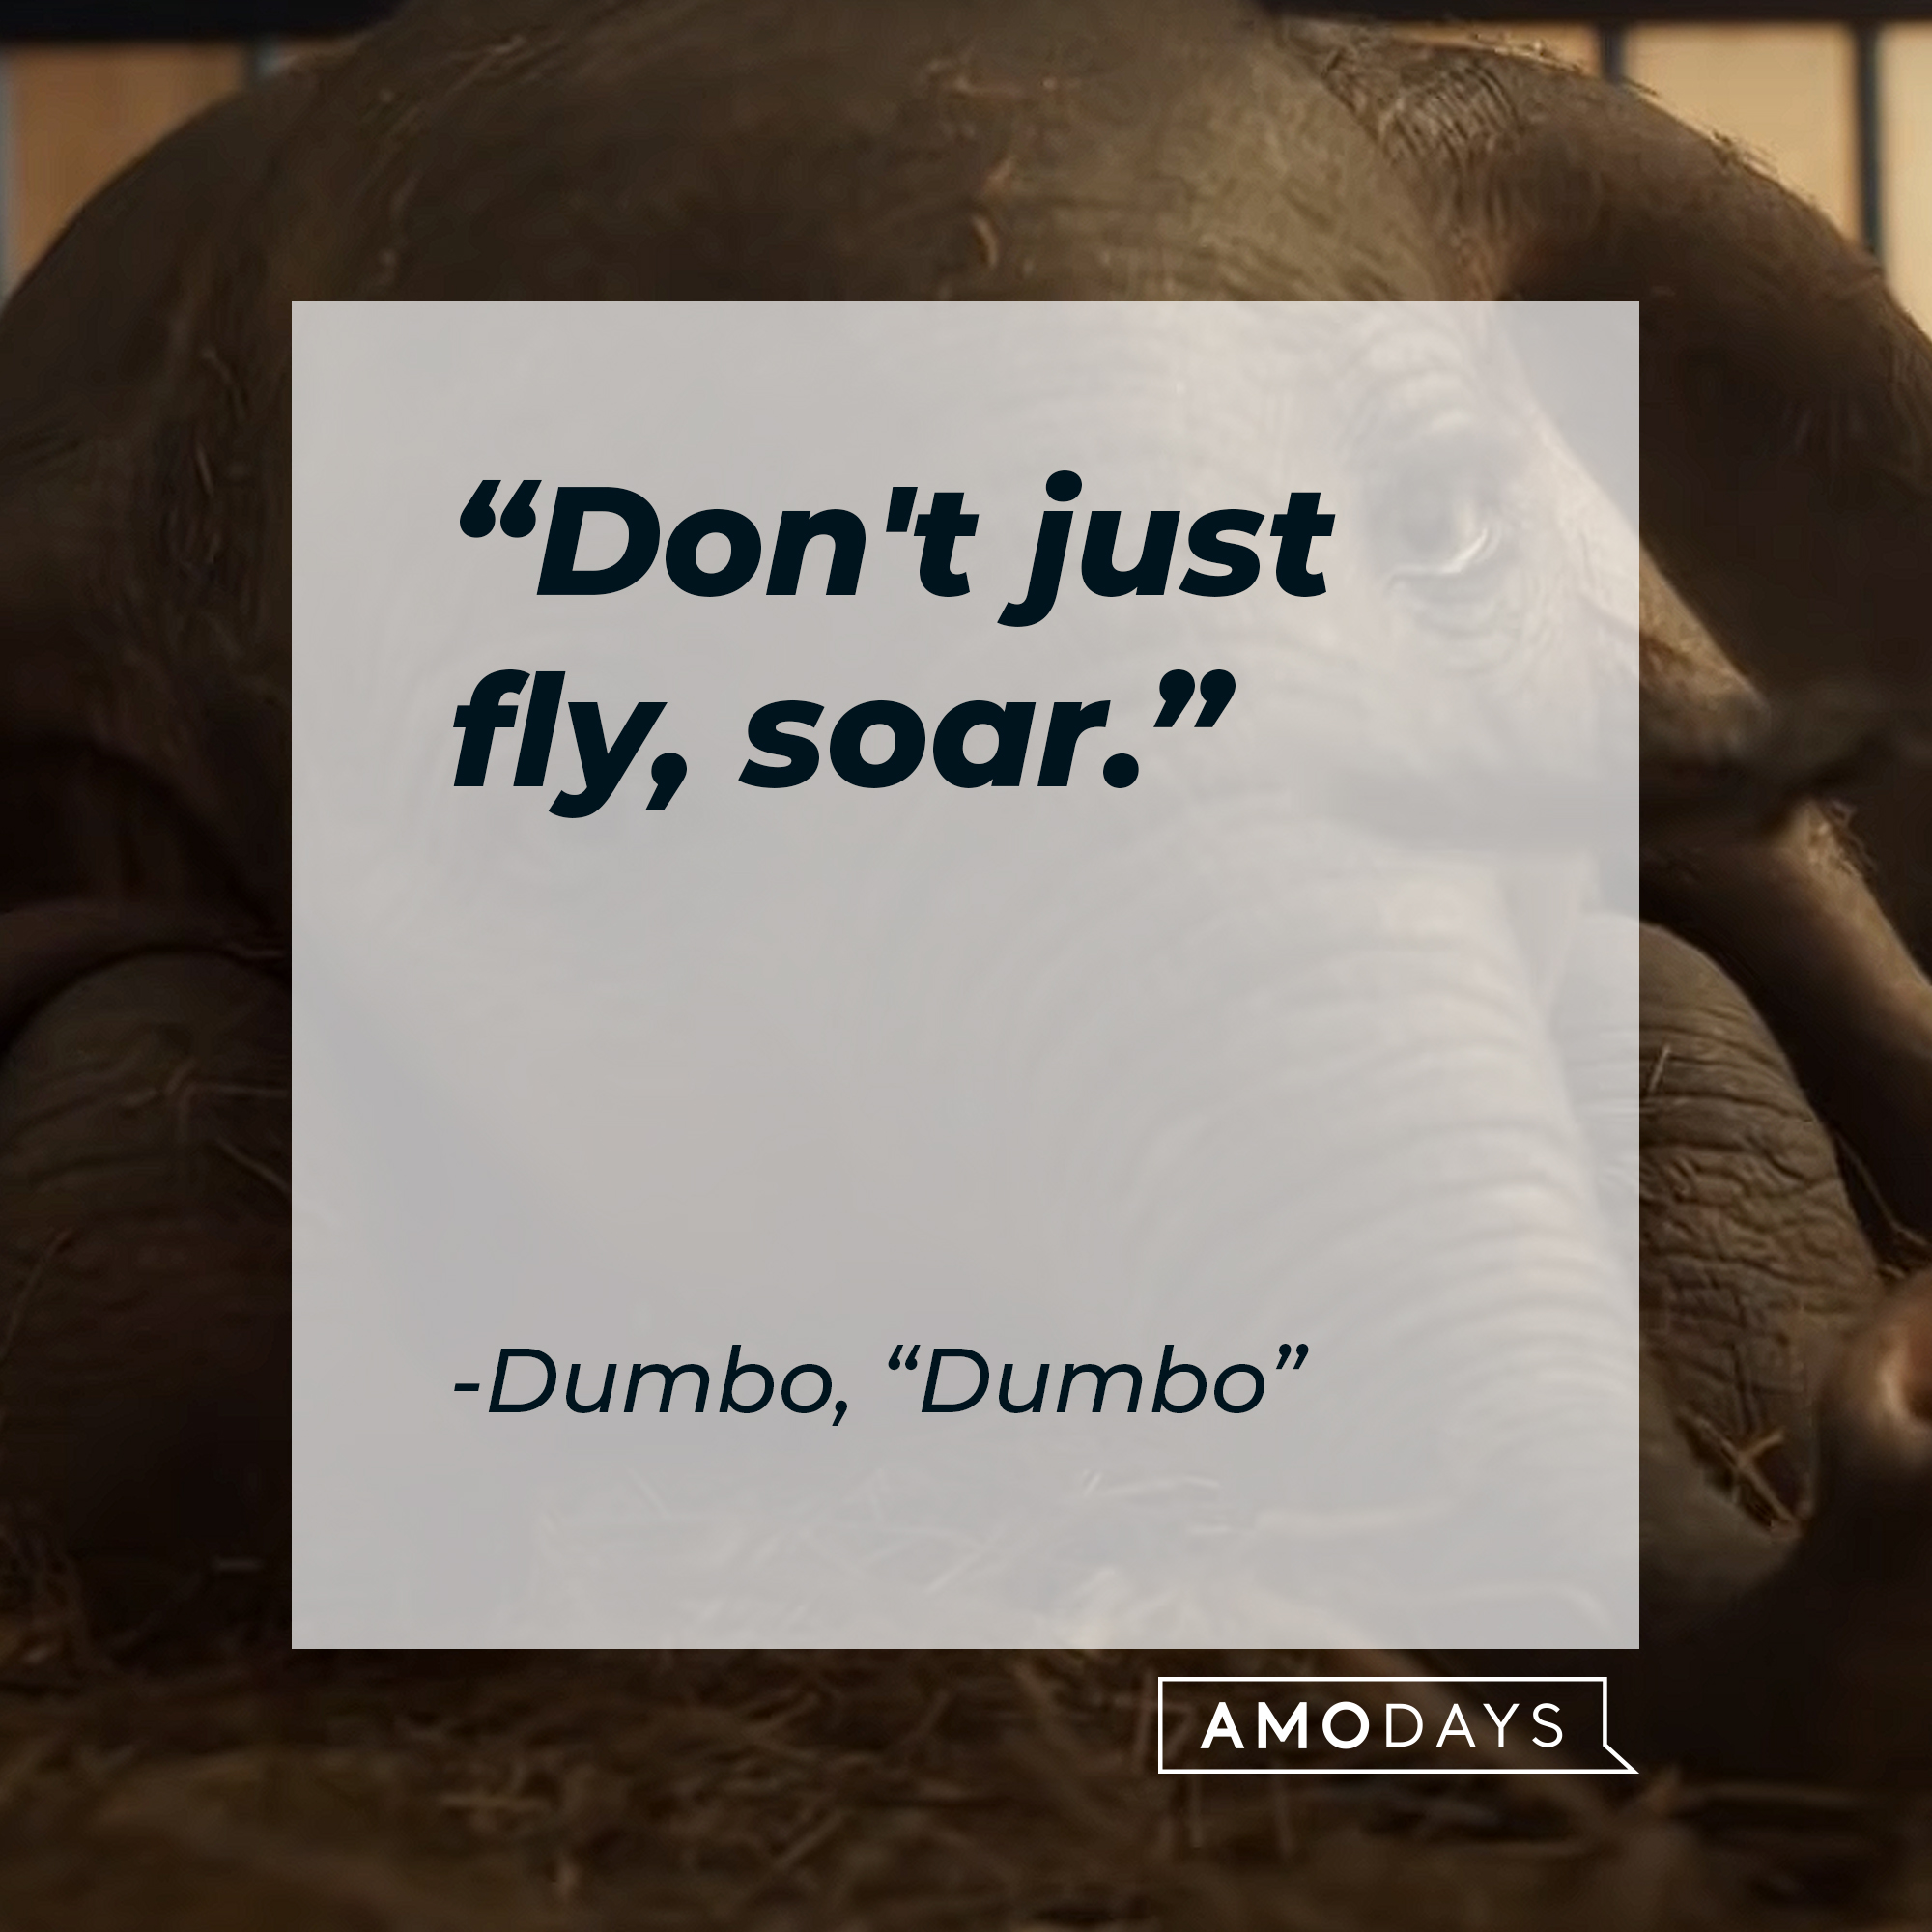 Dumbo's "Dumbo" quote: "Don't just fly, soar." | Source: Youtube.com/DisneyMovieTrailers